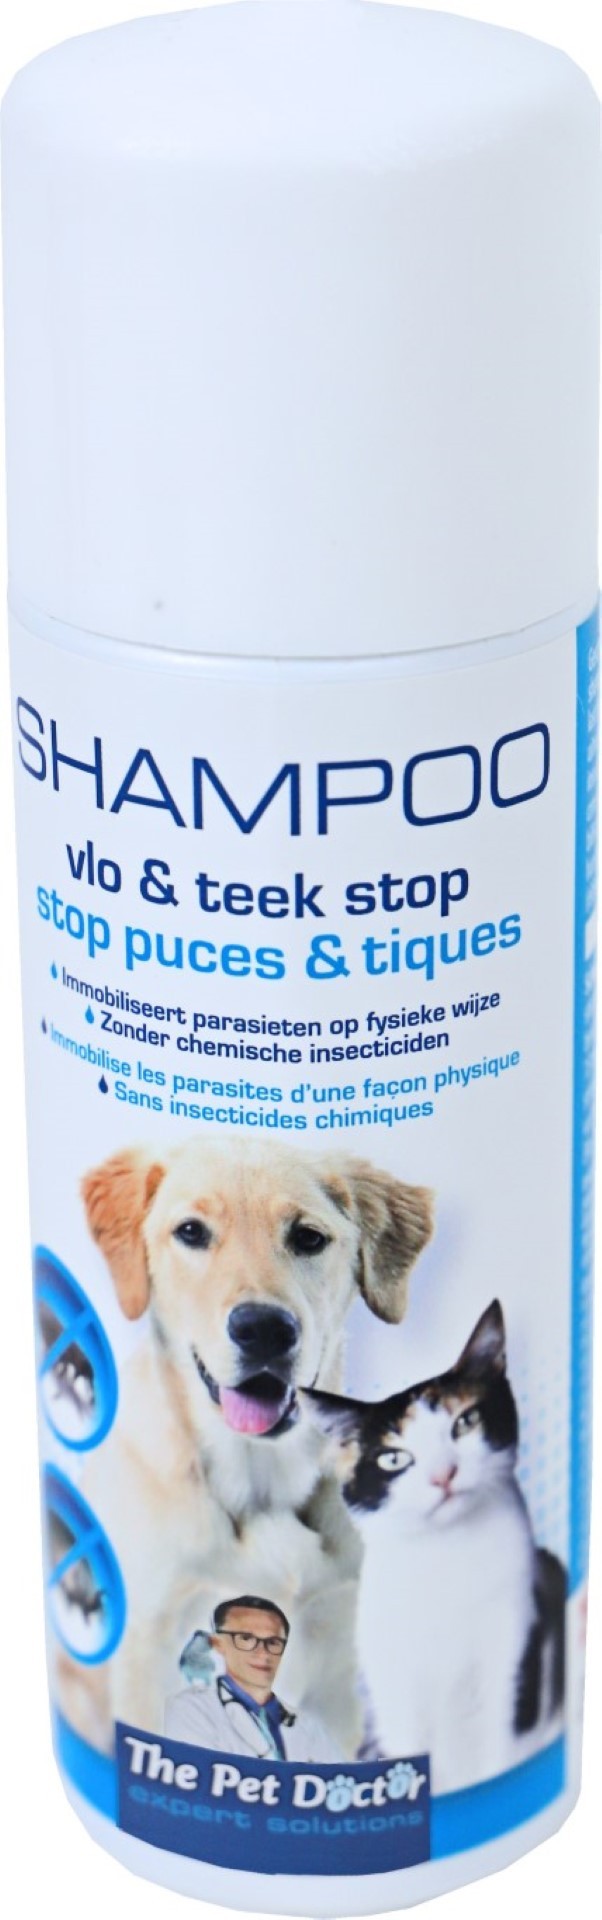 The Pet Doctor vlo & teek stop shampoo 200 ml